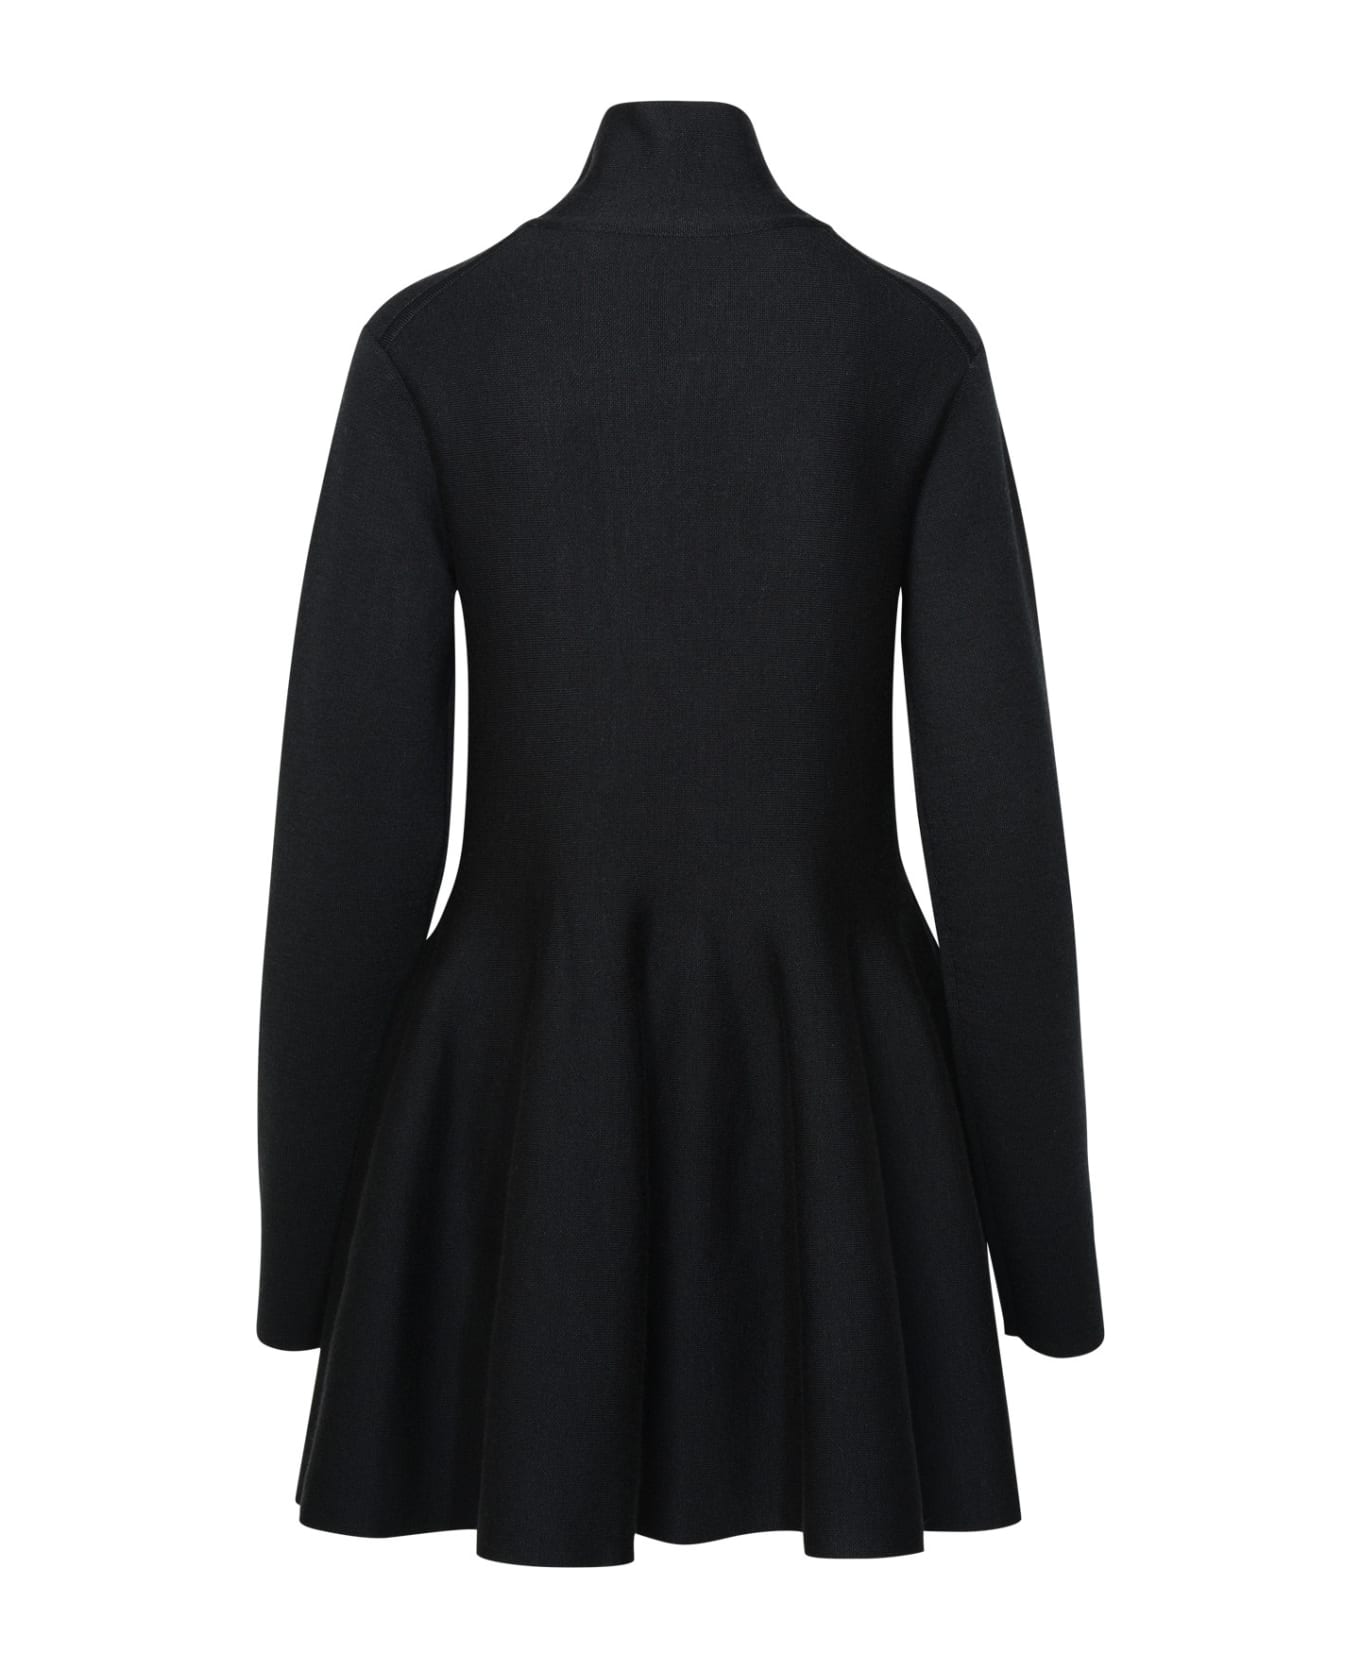 Khaite Black Wool Blend Dress - Black